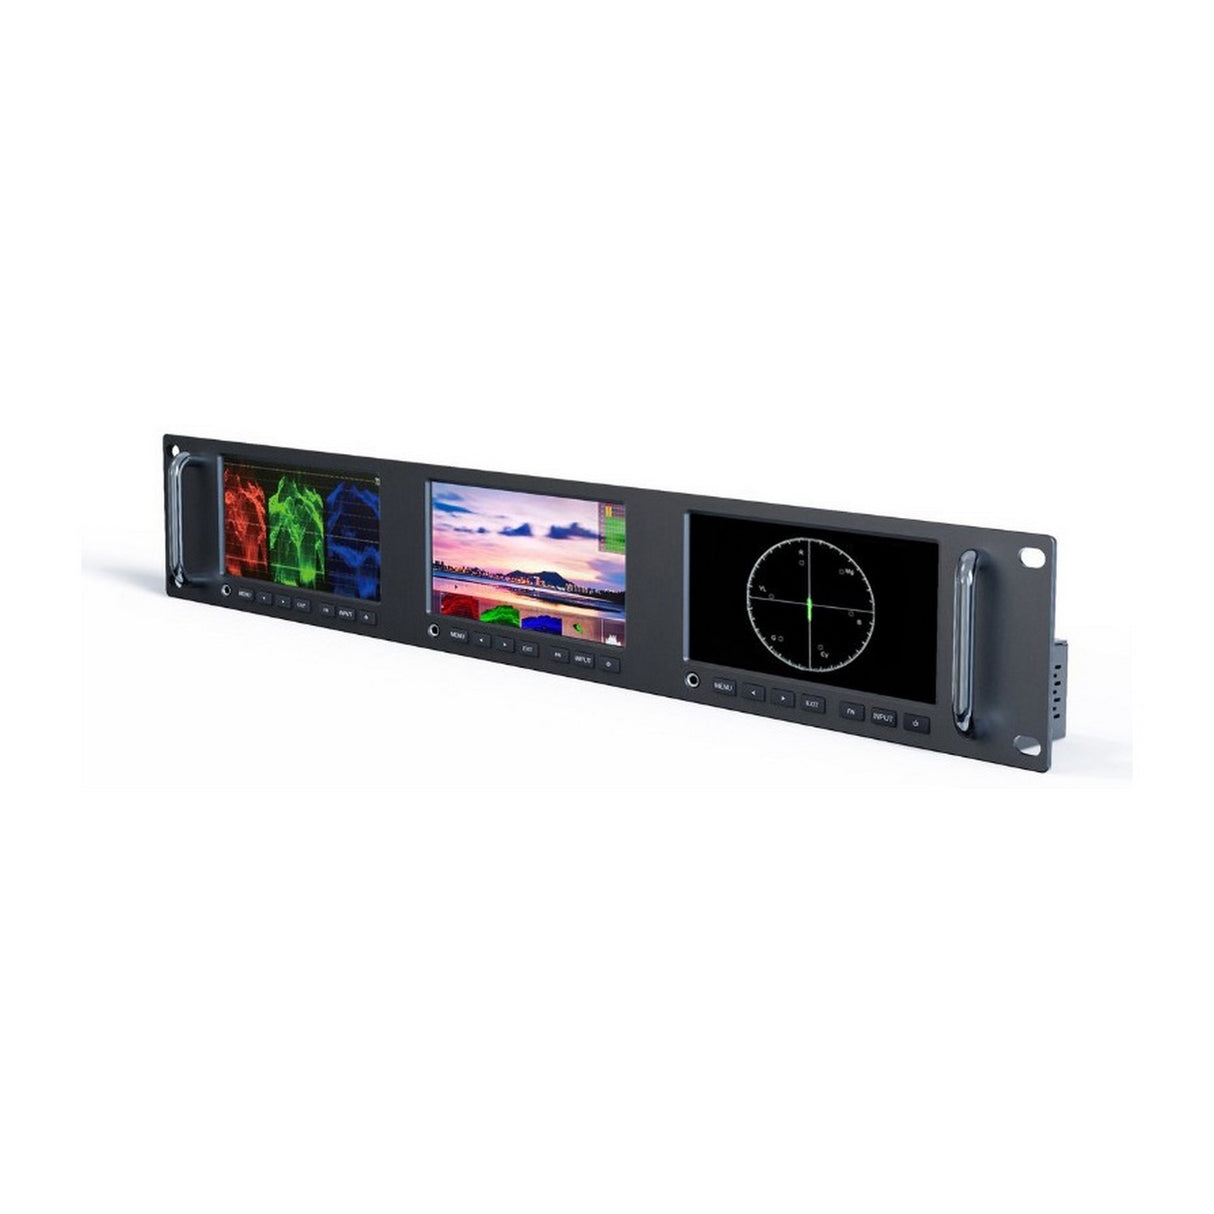 Lilliput RM-503S Triple 5-Inchn Rack Mount SDI Monitor with HDMI 3G-SDI/LAN